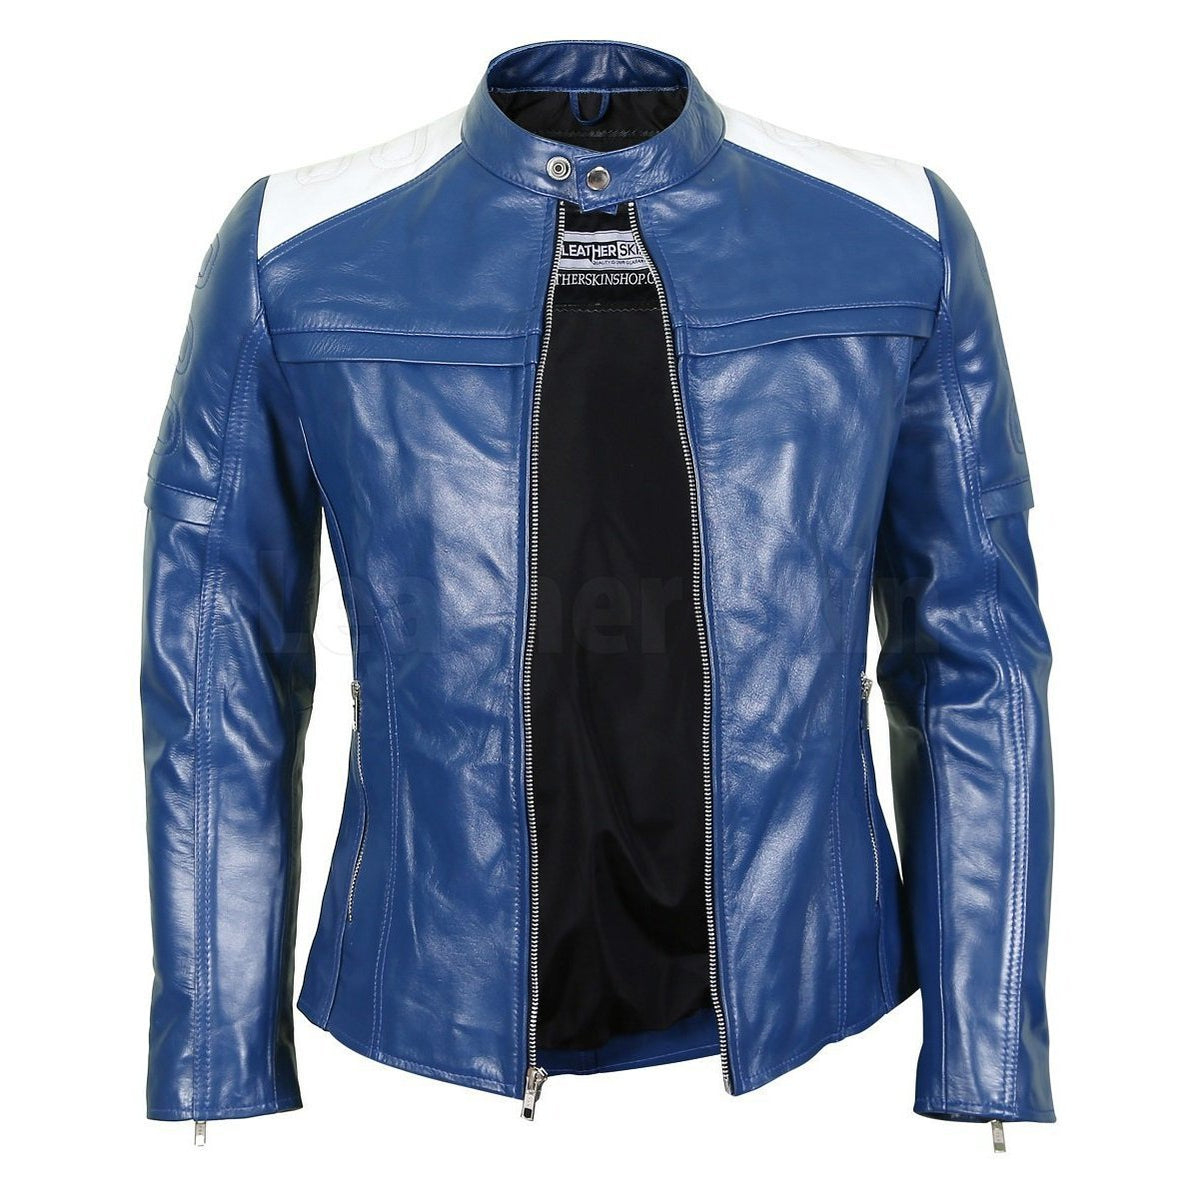 leathersguru Women's Custom Made Blauer Charlie Lady Blue & White Color 100% Pure Cowhide Leather Fashion Biker Jacket 5-Large